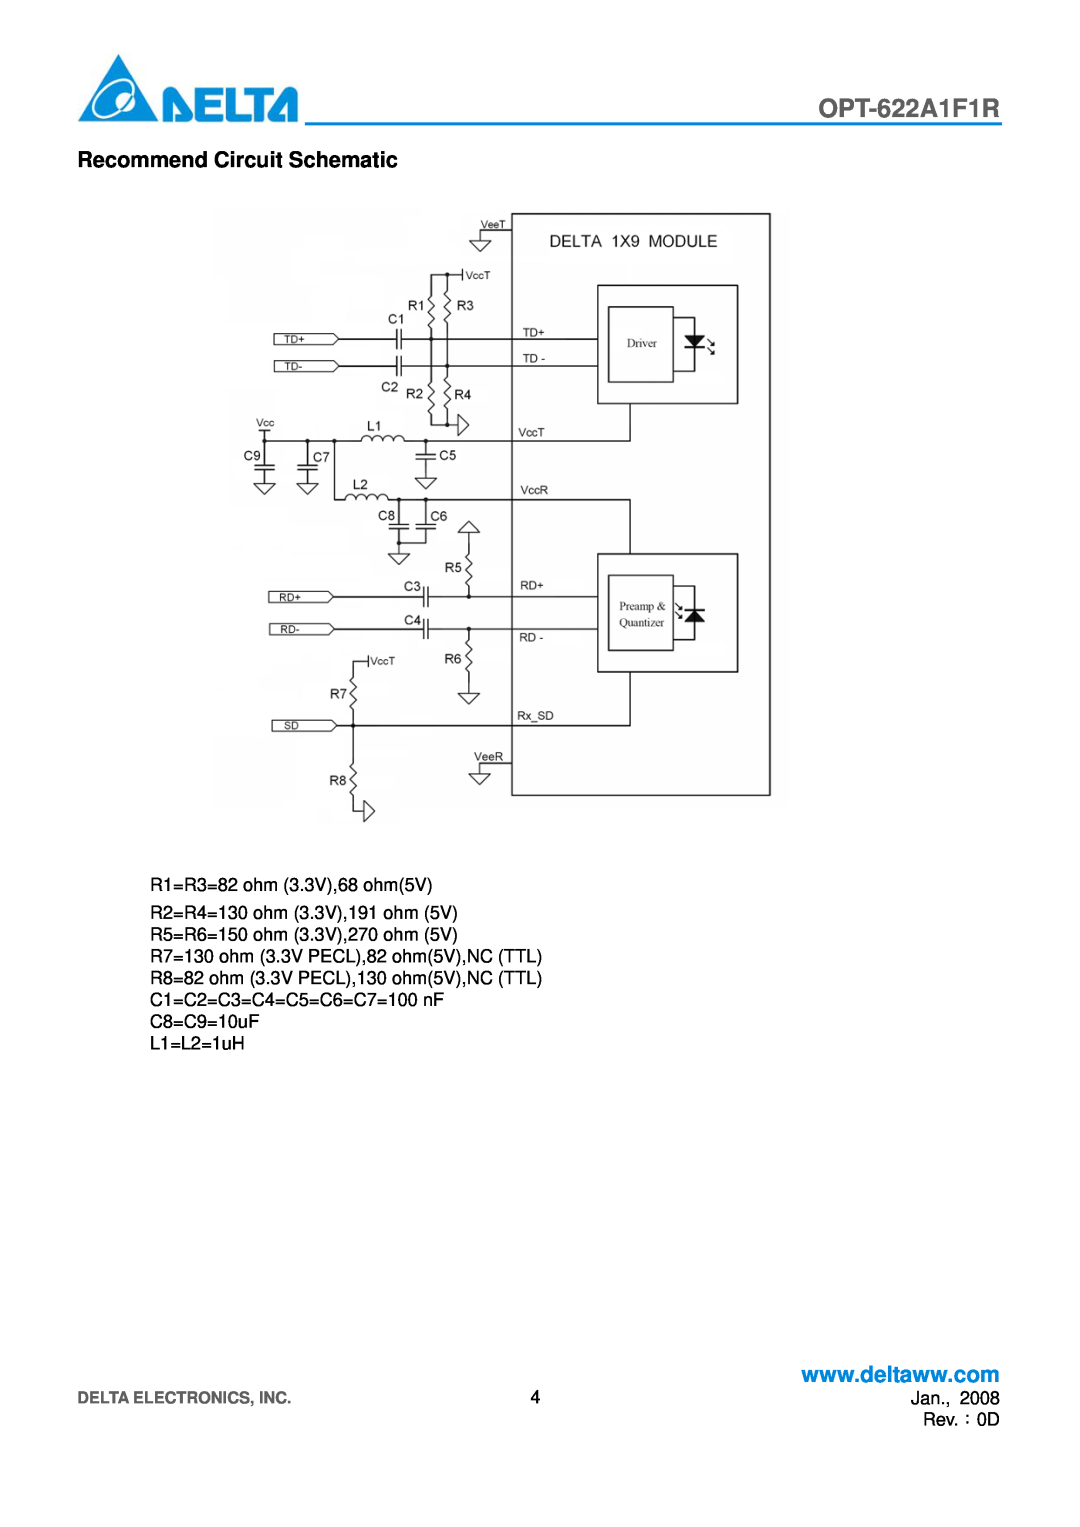 Delta Electronics OPT-622A1F1R manual Recommend Circuit Schematic, Delta Electronics, Inc 